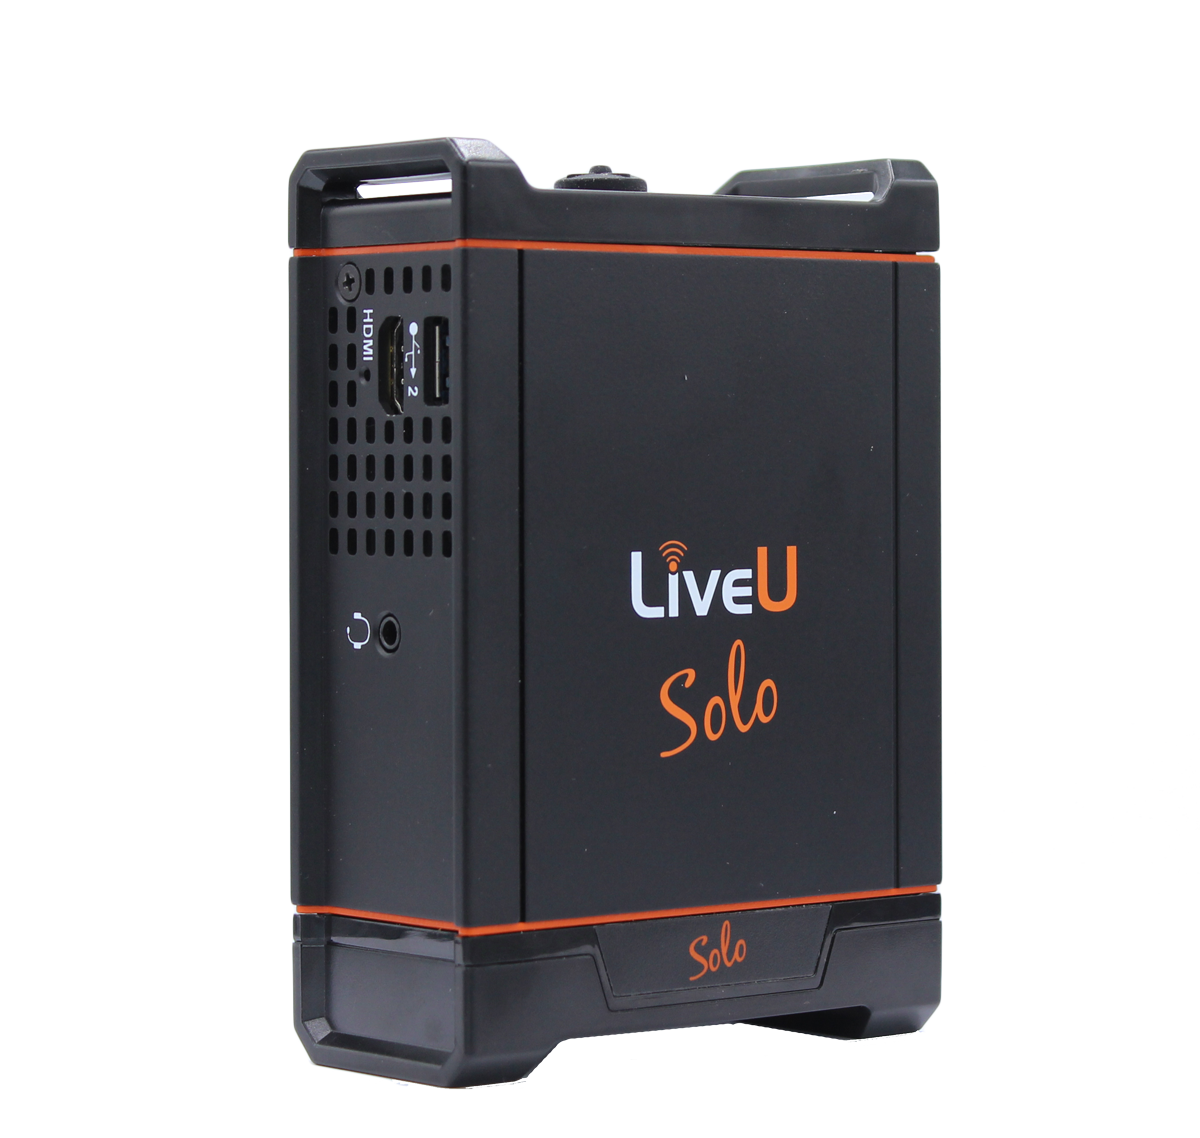 LiveU Solo HDMI Bundle with 1 year LRT Virtual Cloud Server